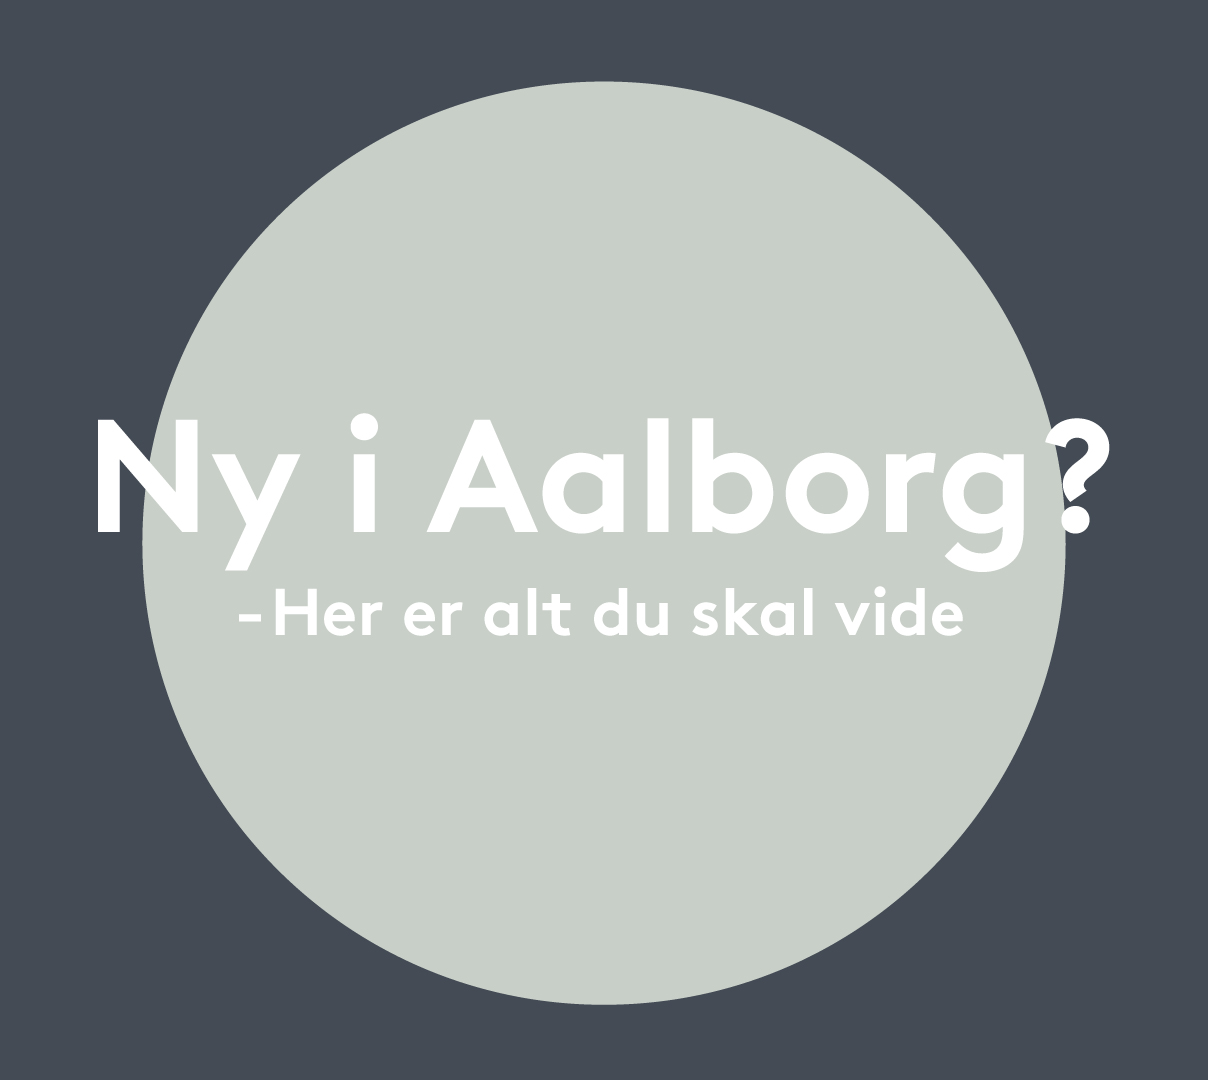 Ny i Aalborg, spisesteder Aalborg, shopping Aalborg, oplevelser Aalborg